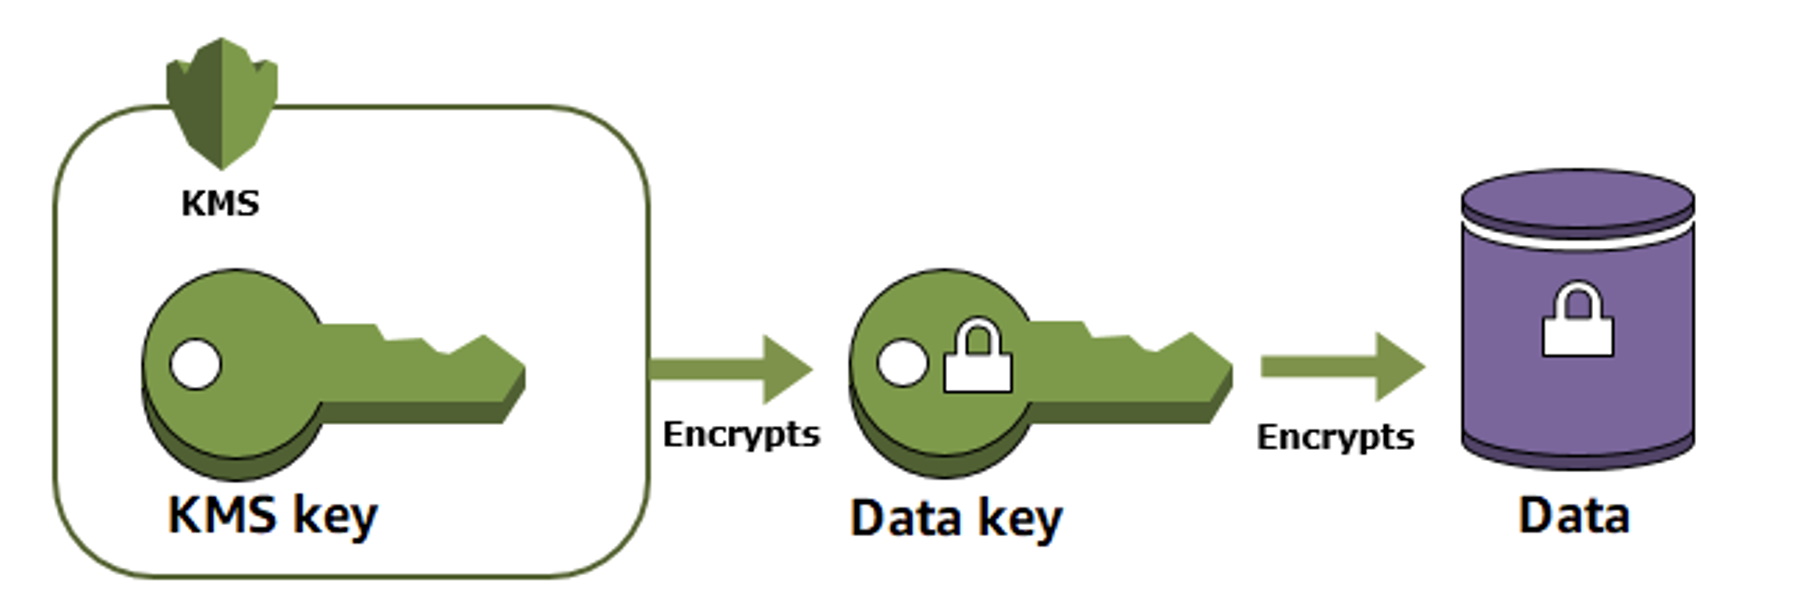 Encryption keys | Encryption keys and application secrets in the cloud | ORBIT Cloud Encyclopedia